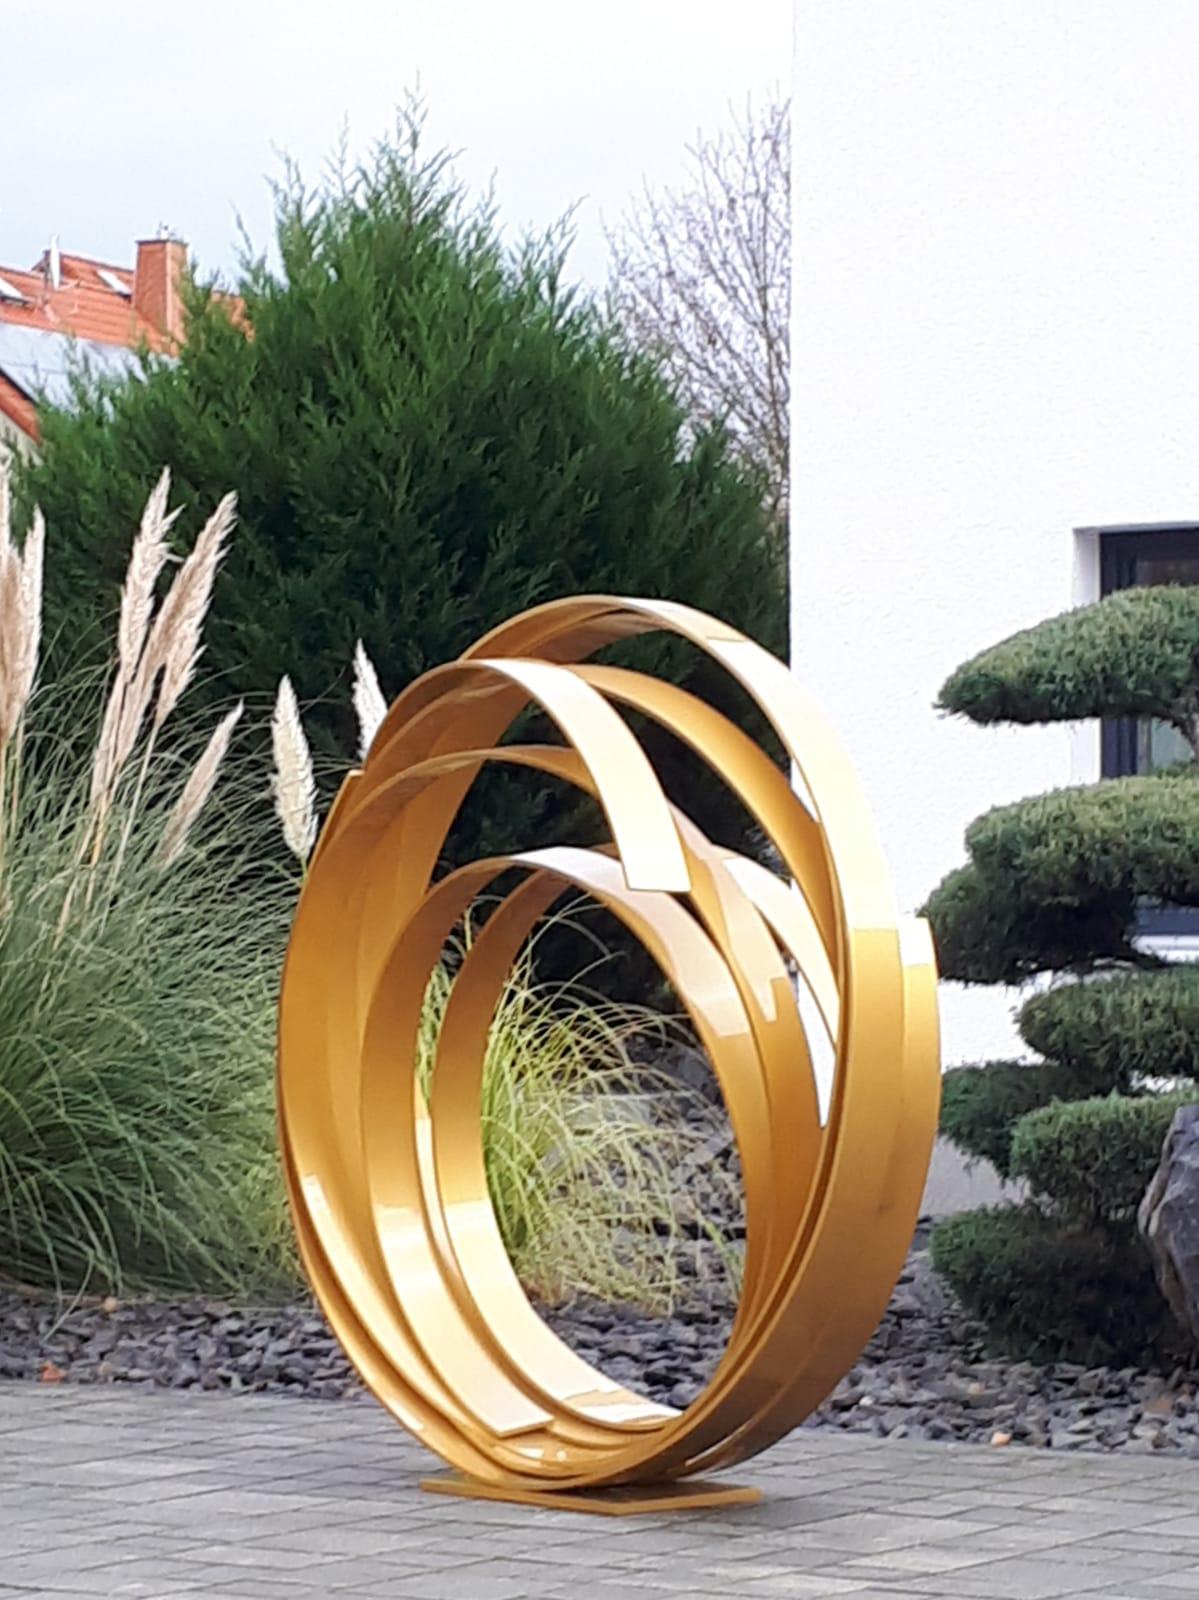 Golden Orbit Contemporary Aluminum  sculpture for Outdoors - Gray Abstract Sculpture by Kuno Vollet